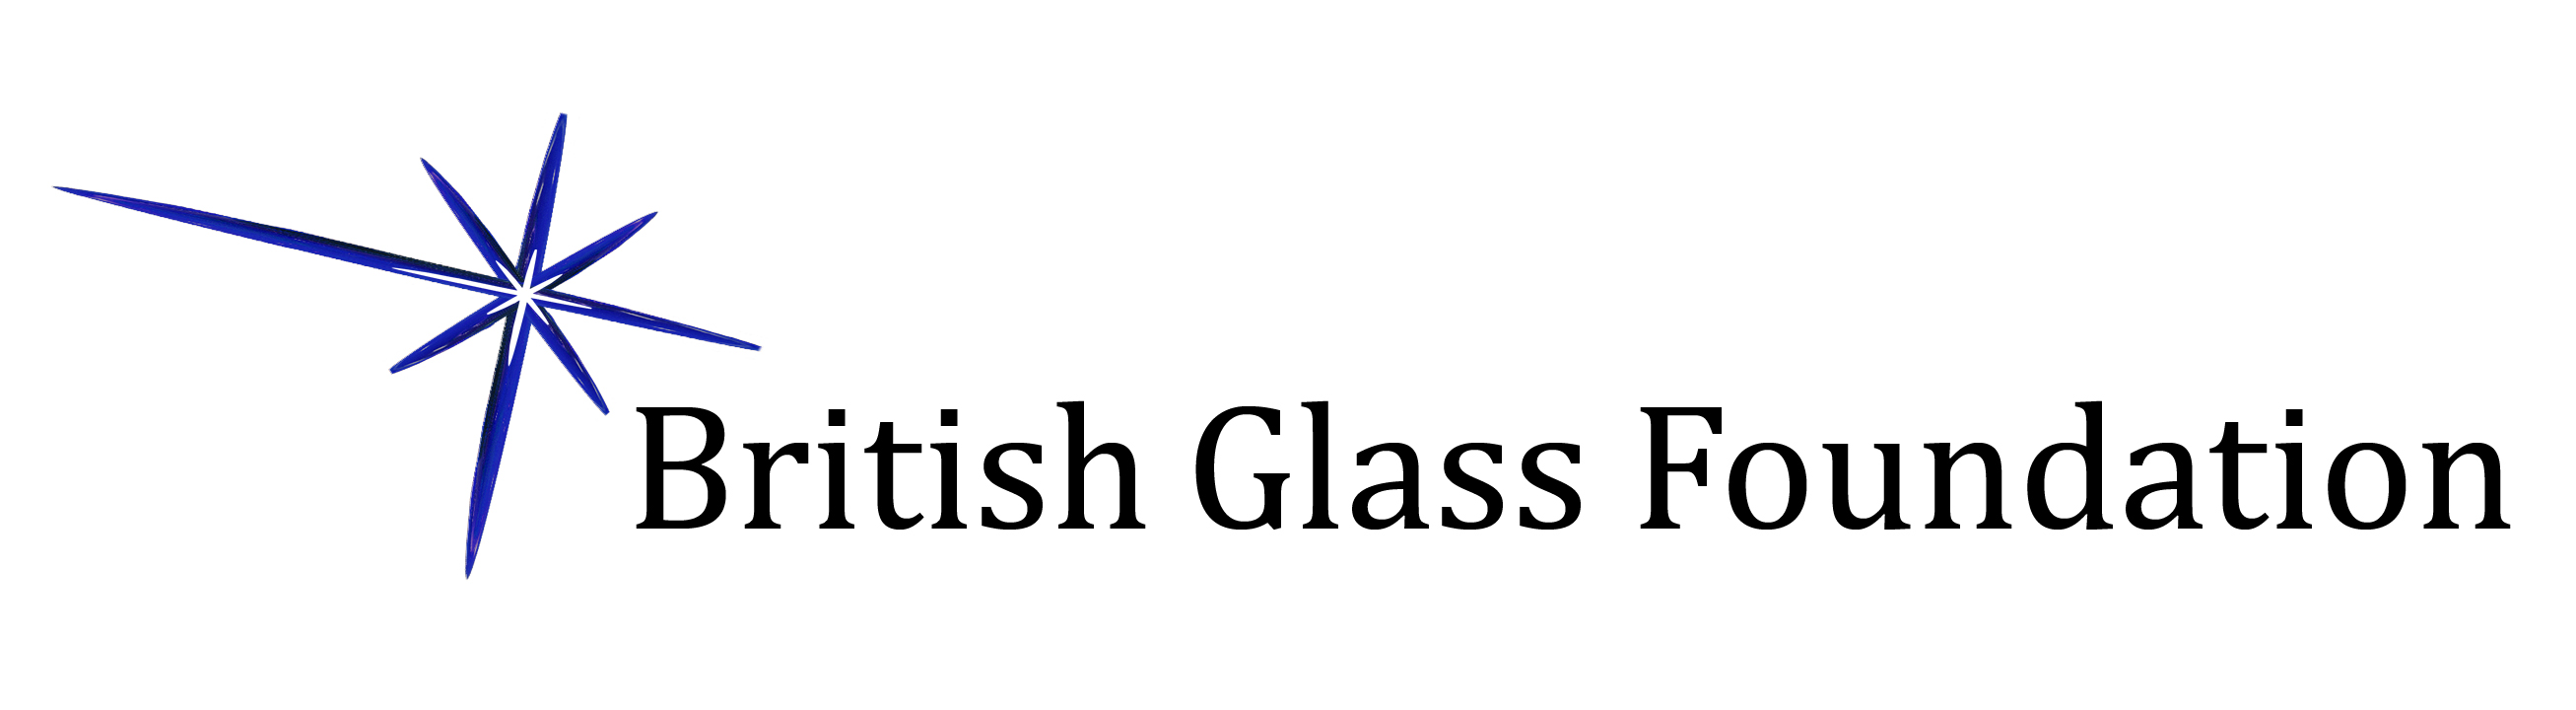 British Glass Foundation - Stourbridge Glass Museum